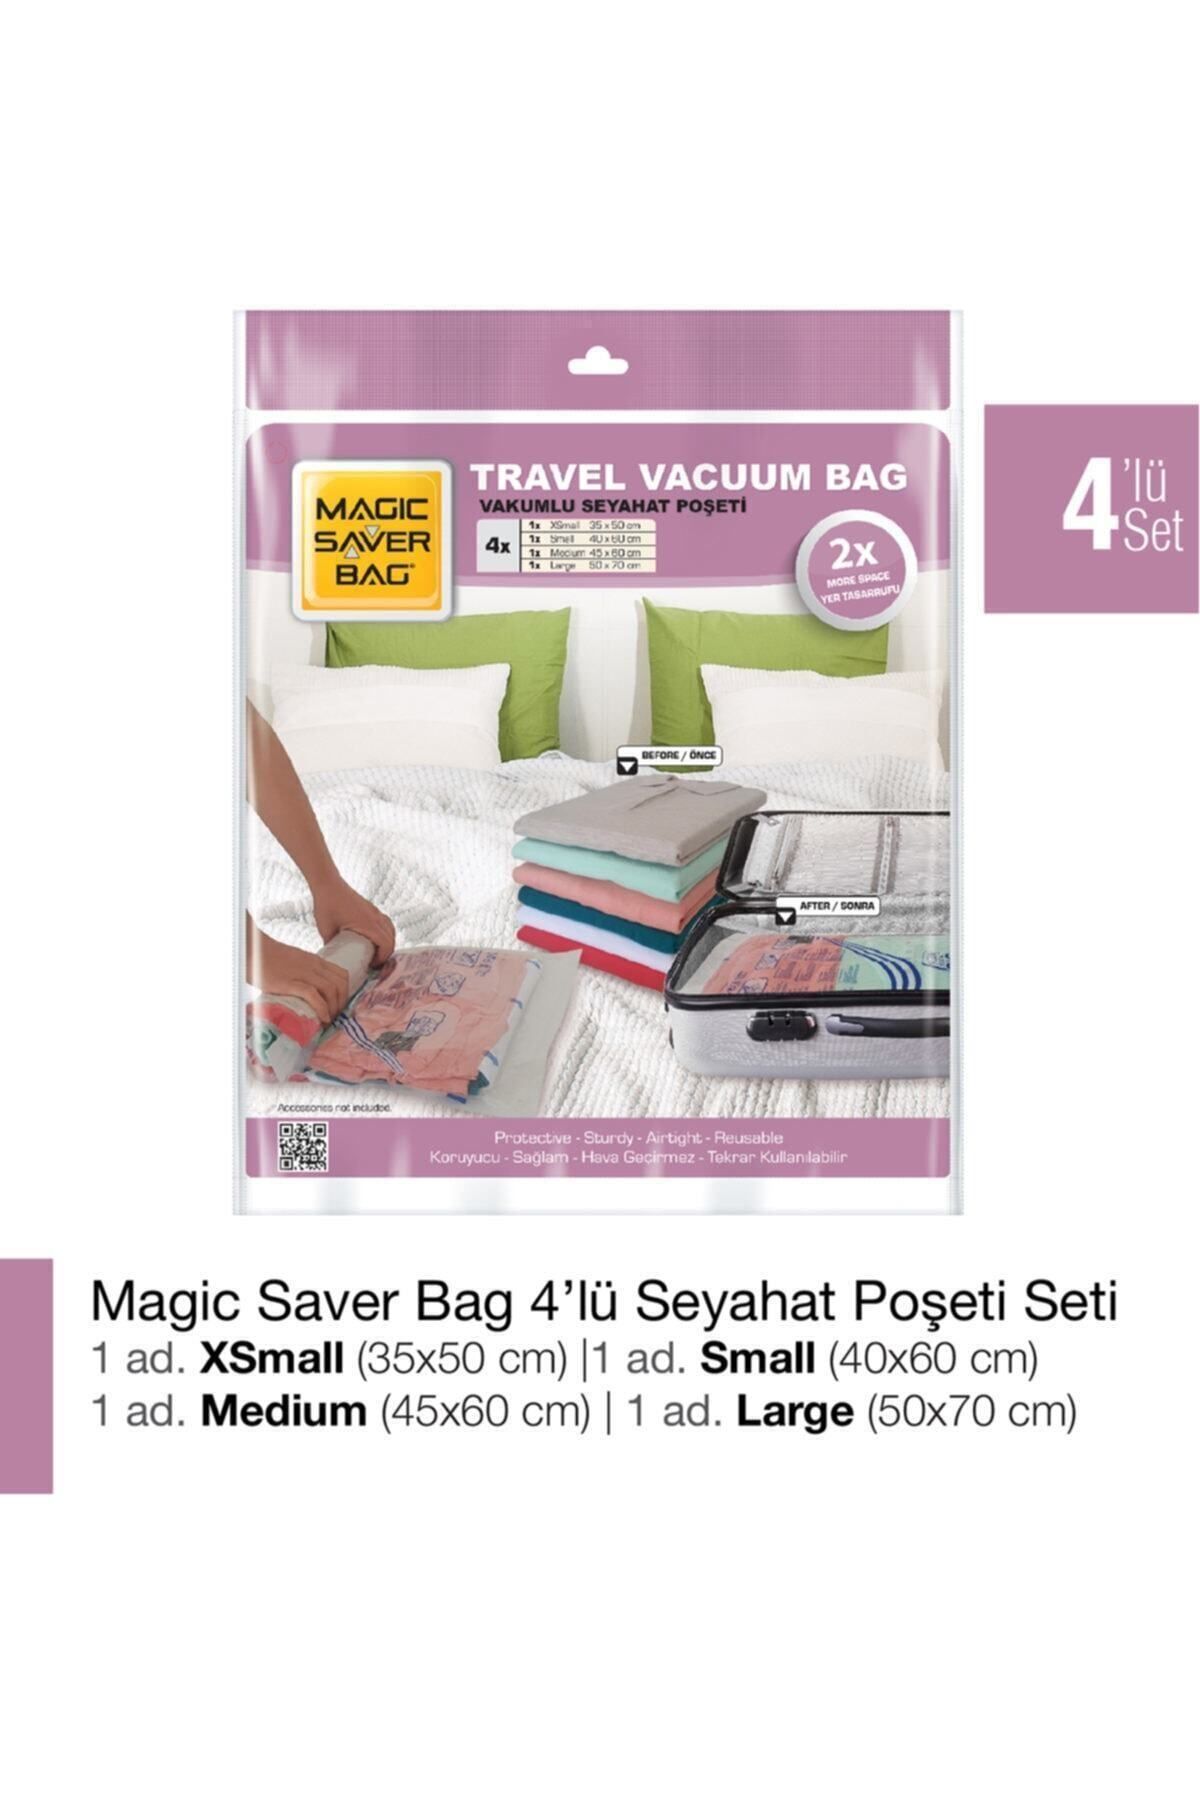 Magic Saver Bag Vakumlu Seyahat Poşeti Seti 4’lü